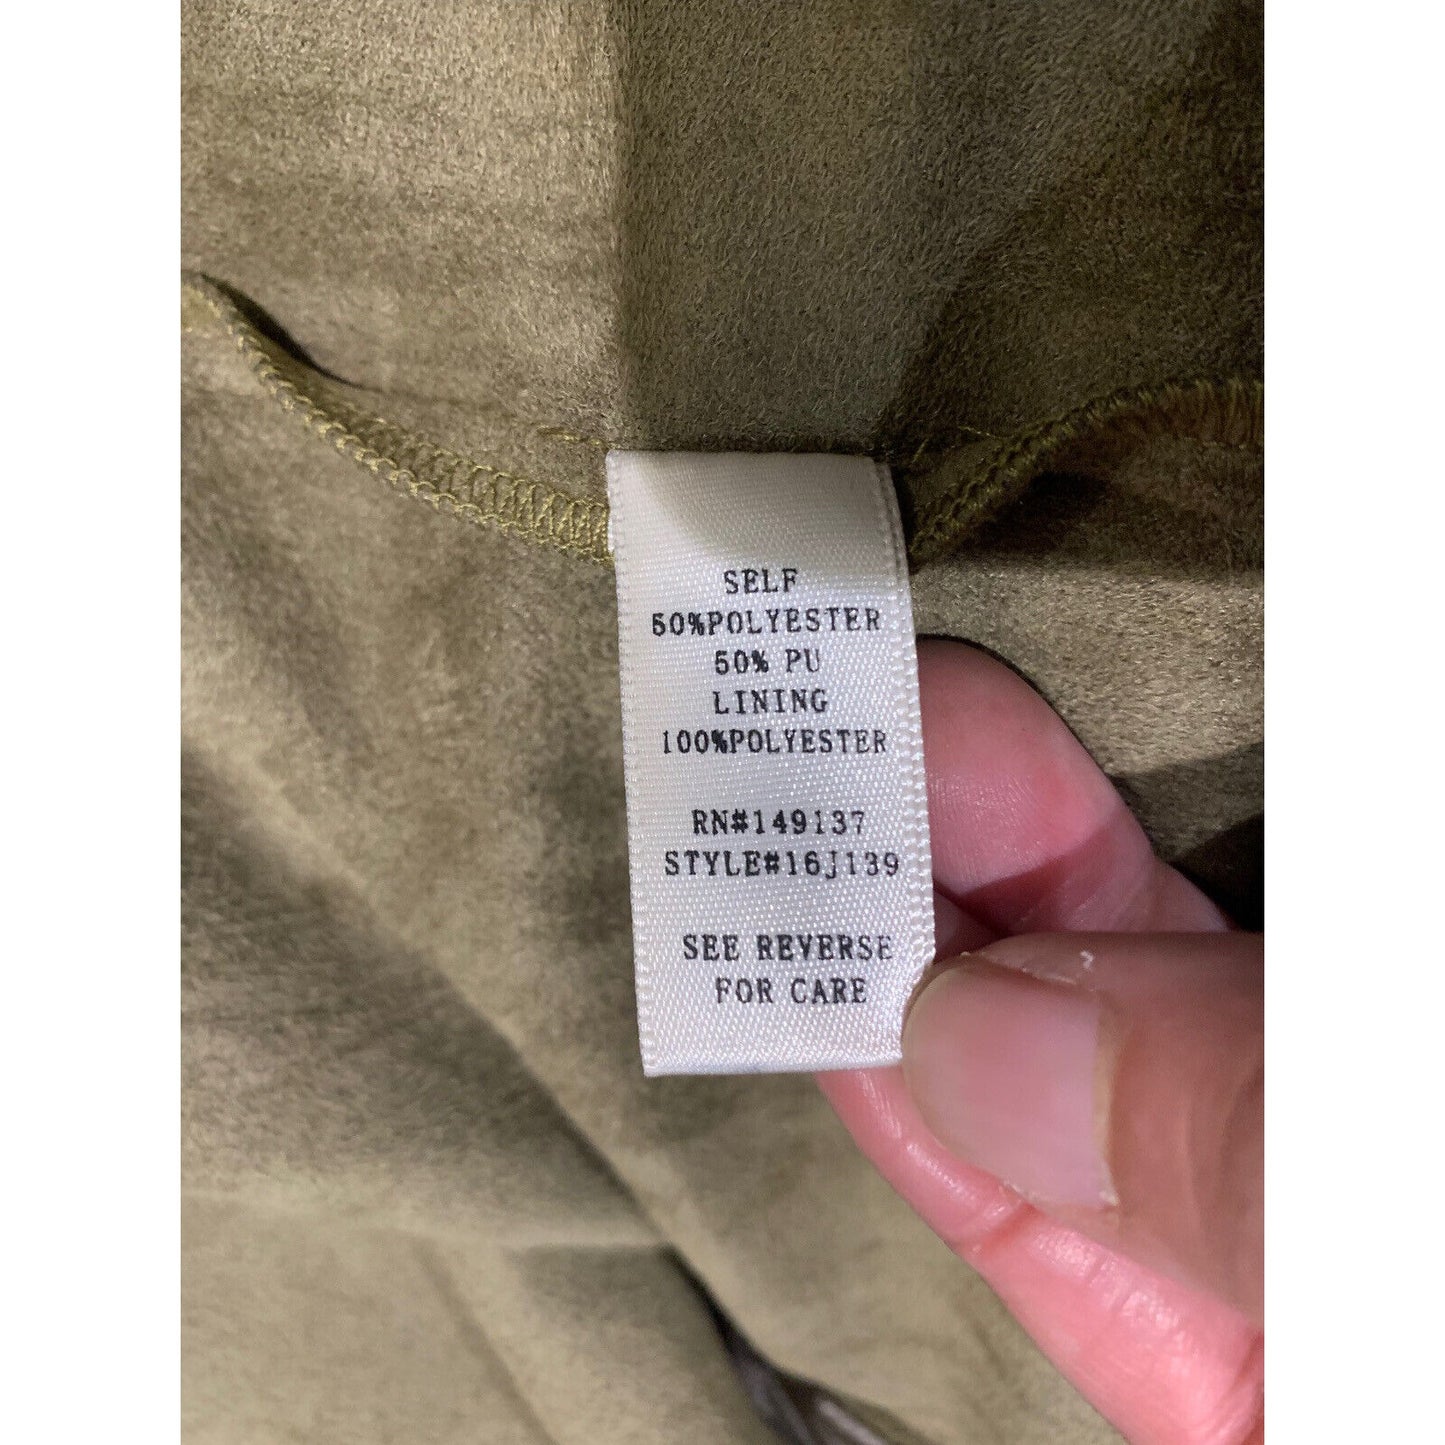 Fabric Label